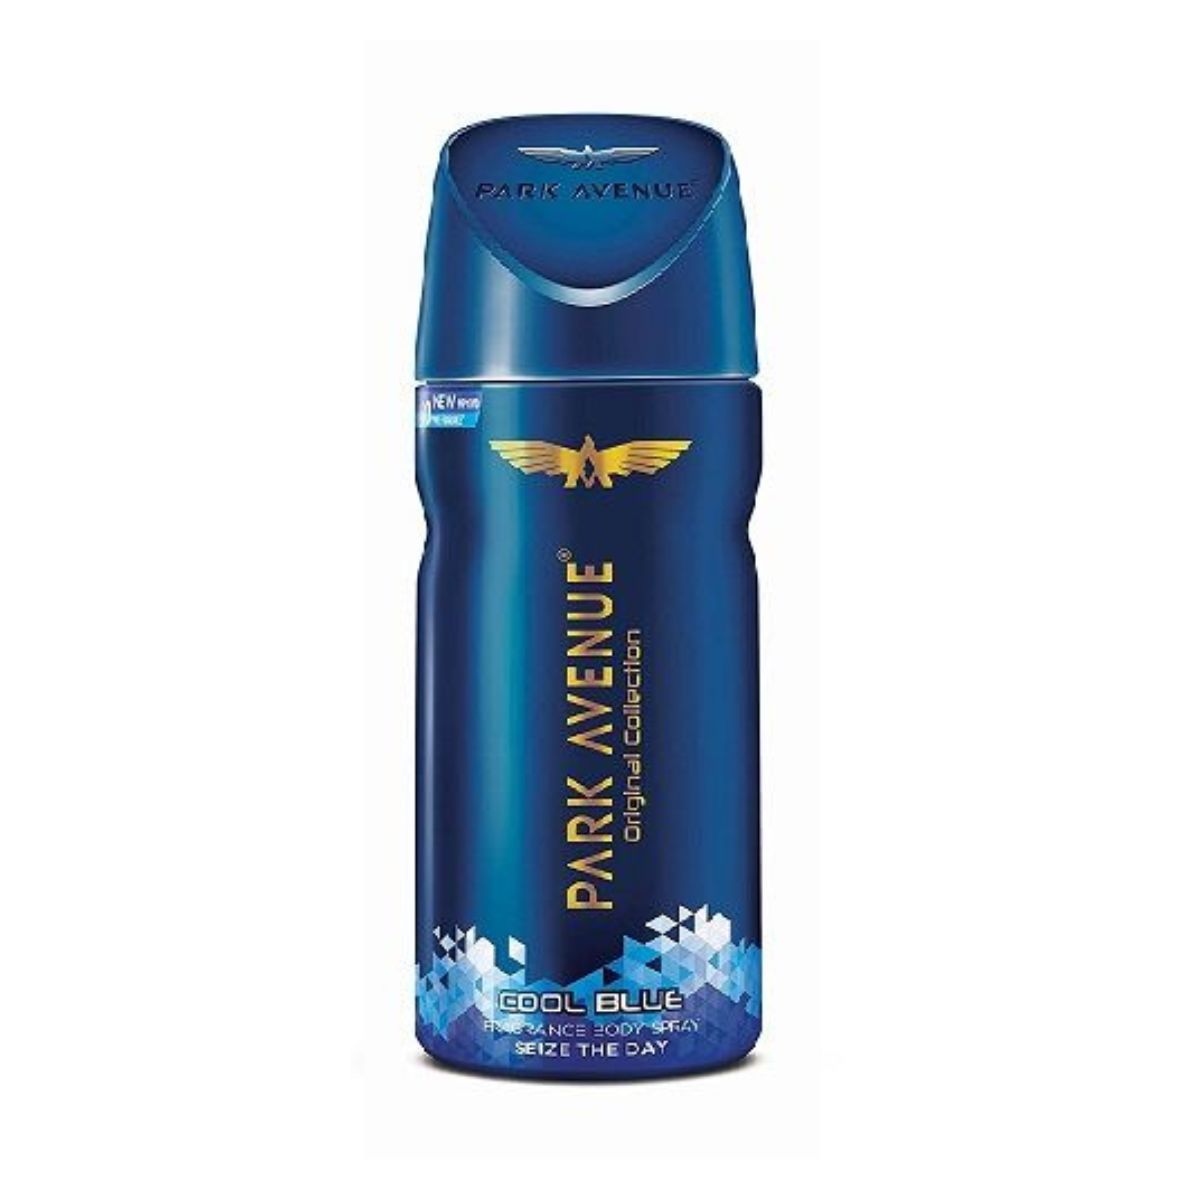 Park Avenue Original Collection - Cool Blue Fragrance Body Spray - 150ml